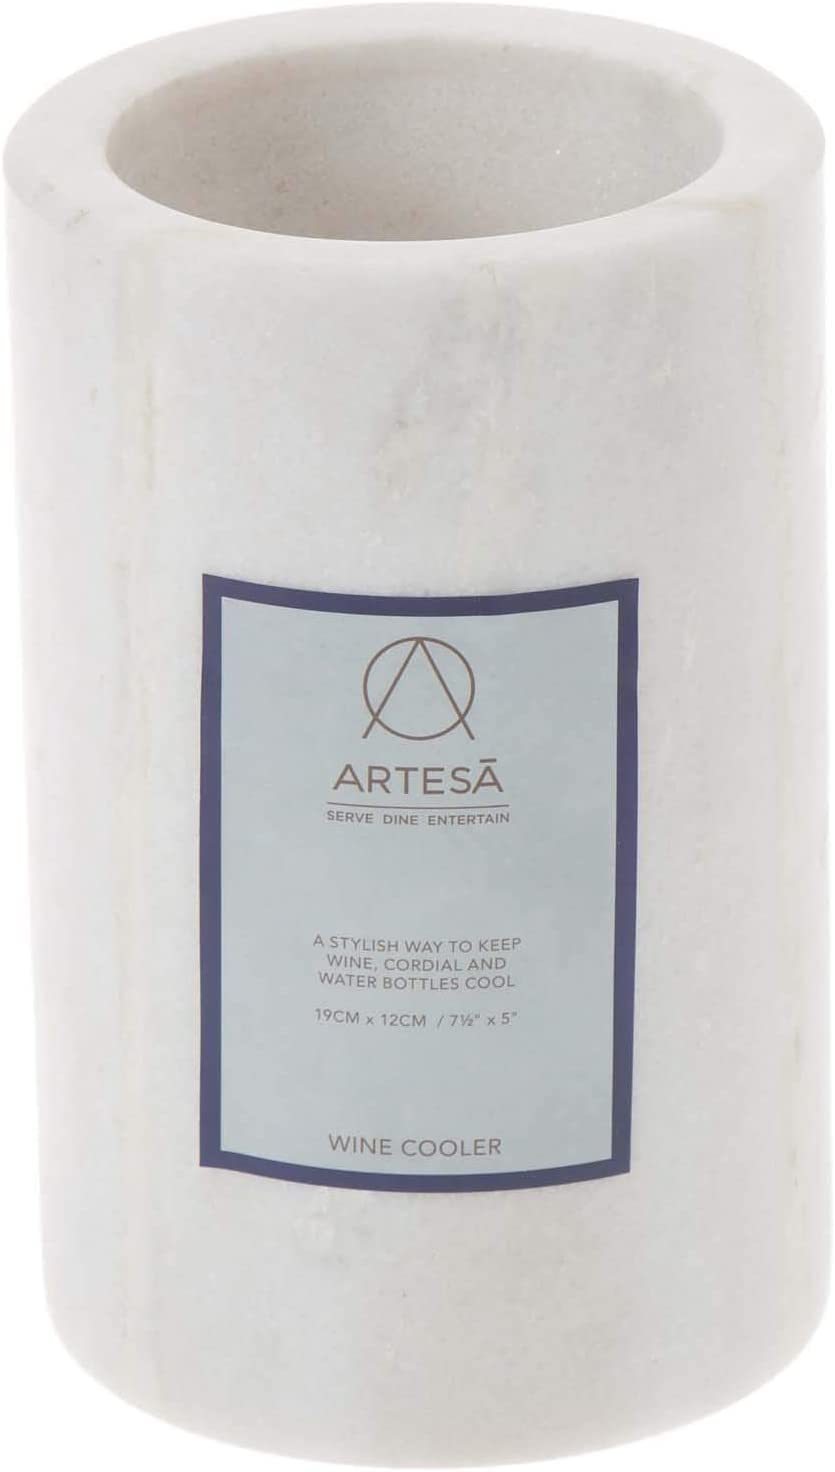 KitchenCraft artesà ARTWCOOL Marble Wine Cooler, 12 x 12 x 19 cm, White